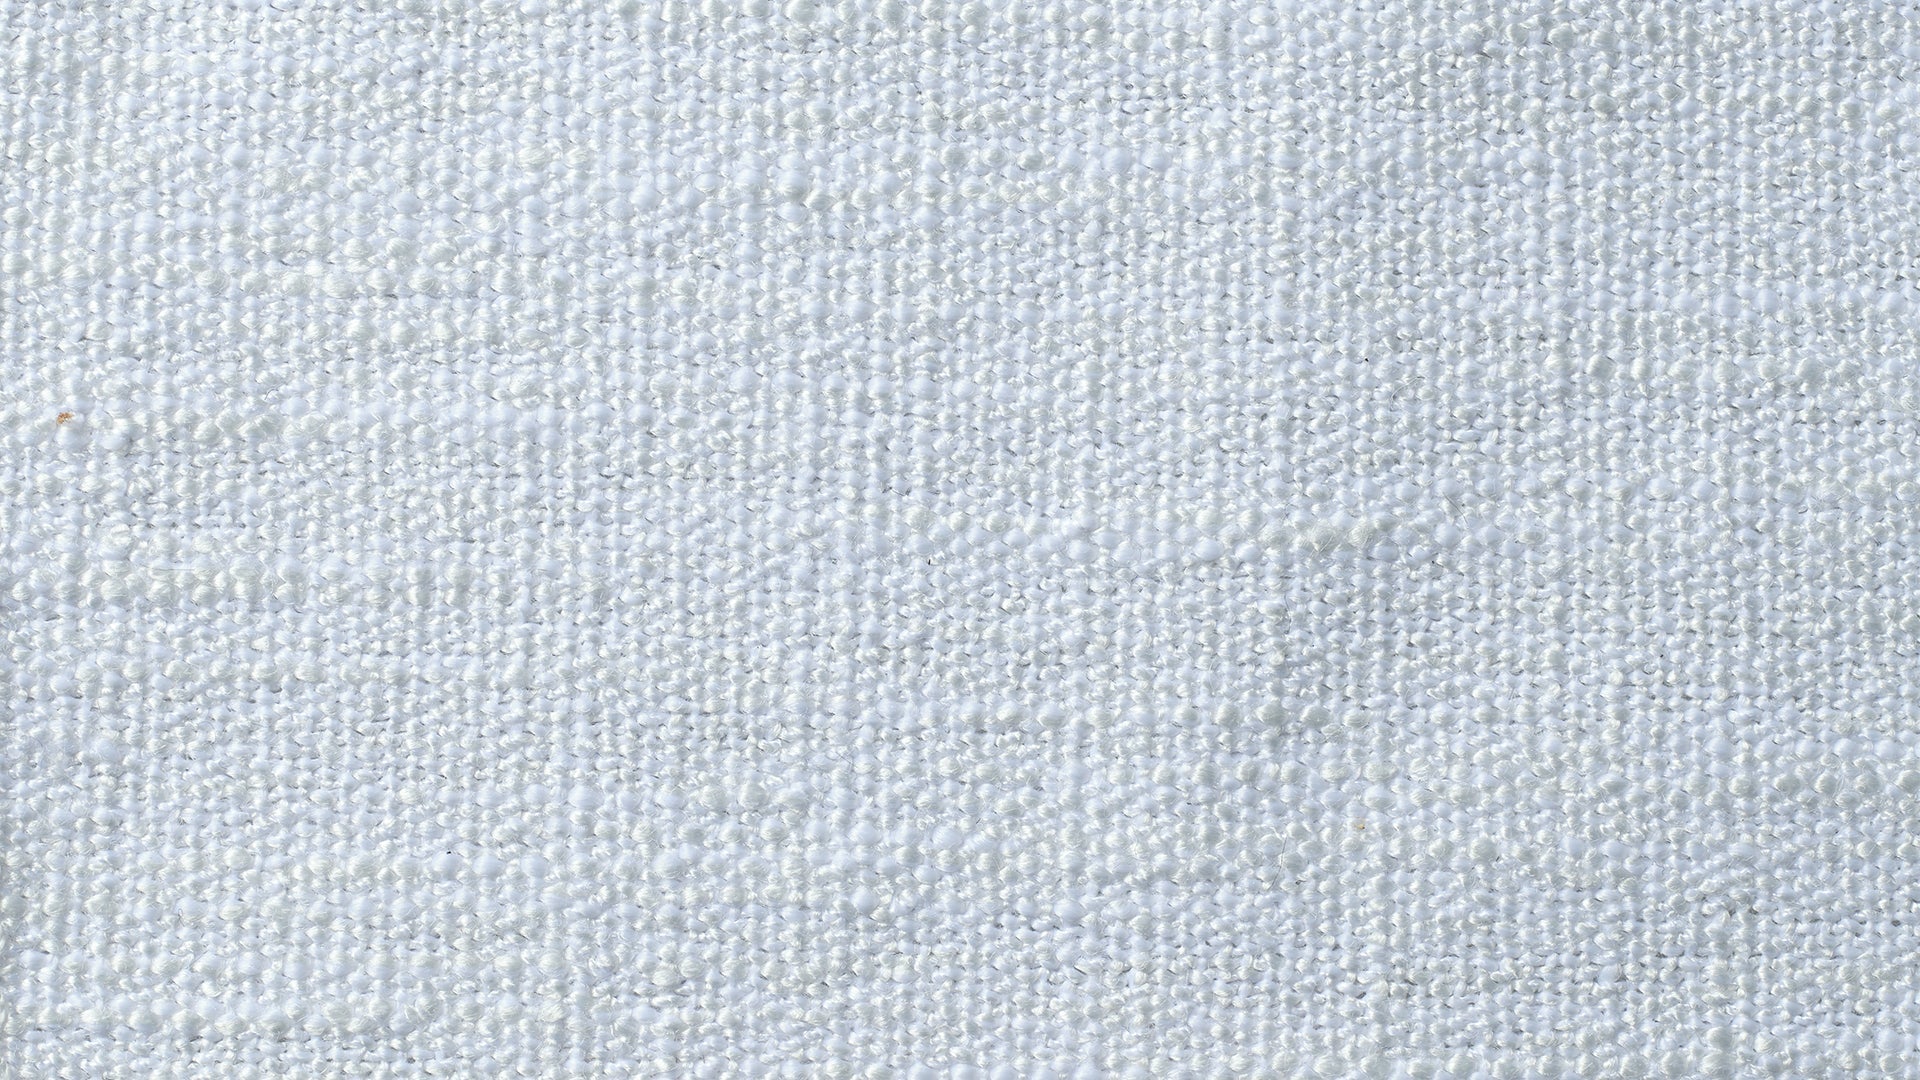 Swatch White, Performance Fabric - Image 1